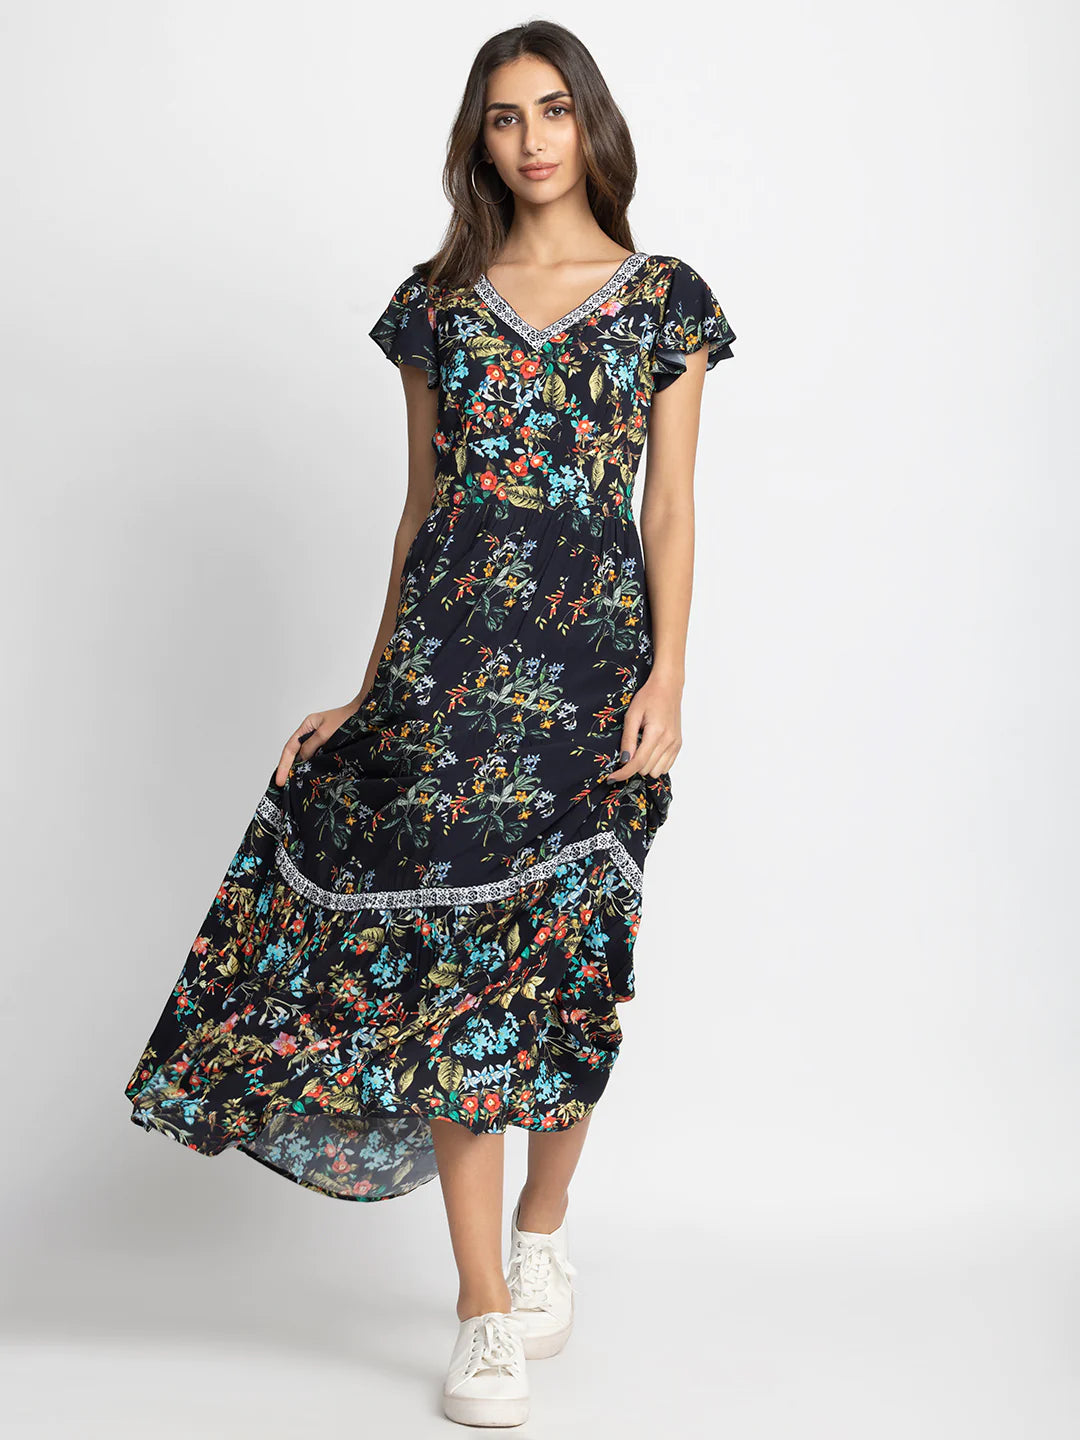 Floral Maxi Dress | Charming Floral Maxi Elegance